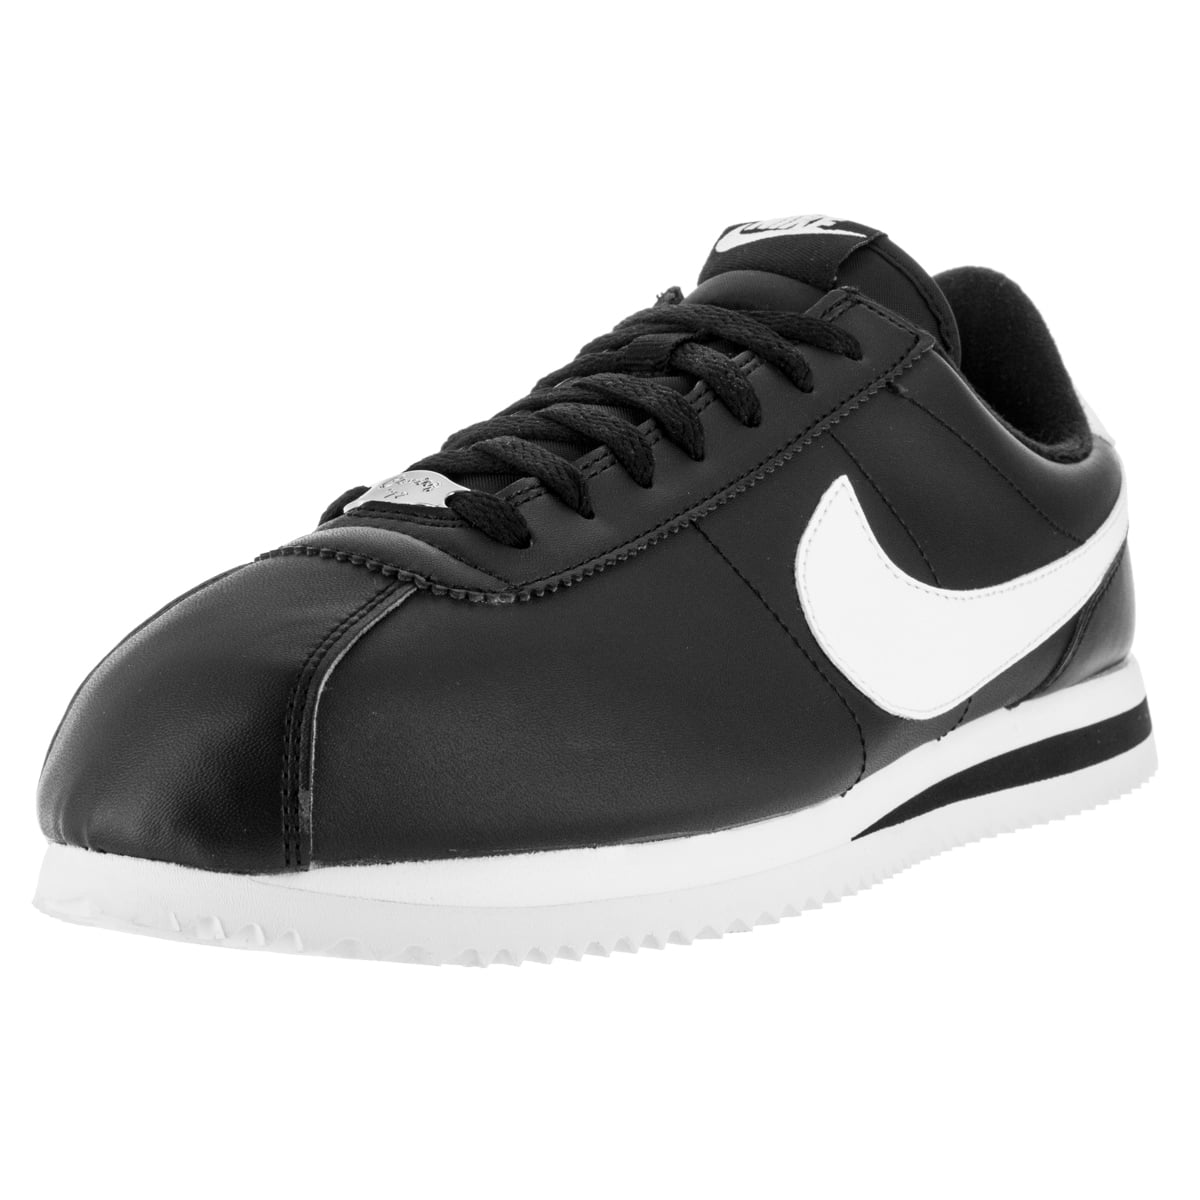 Nike Men Cortez Basic Leather Black White-Metallic Silver Size 7.0 US